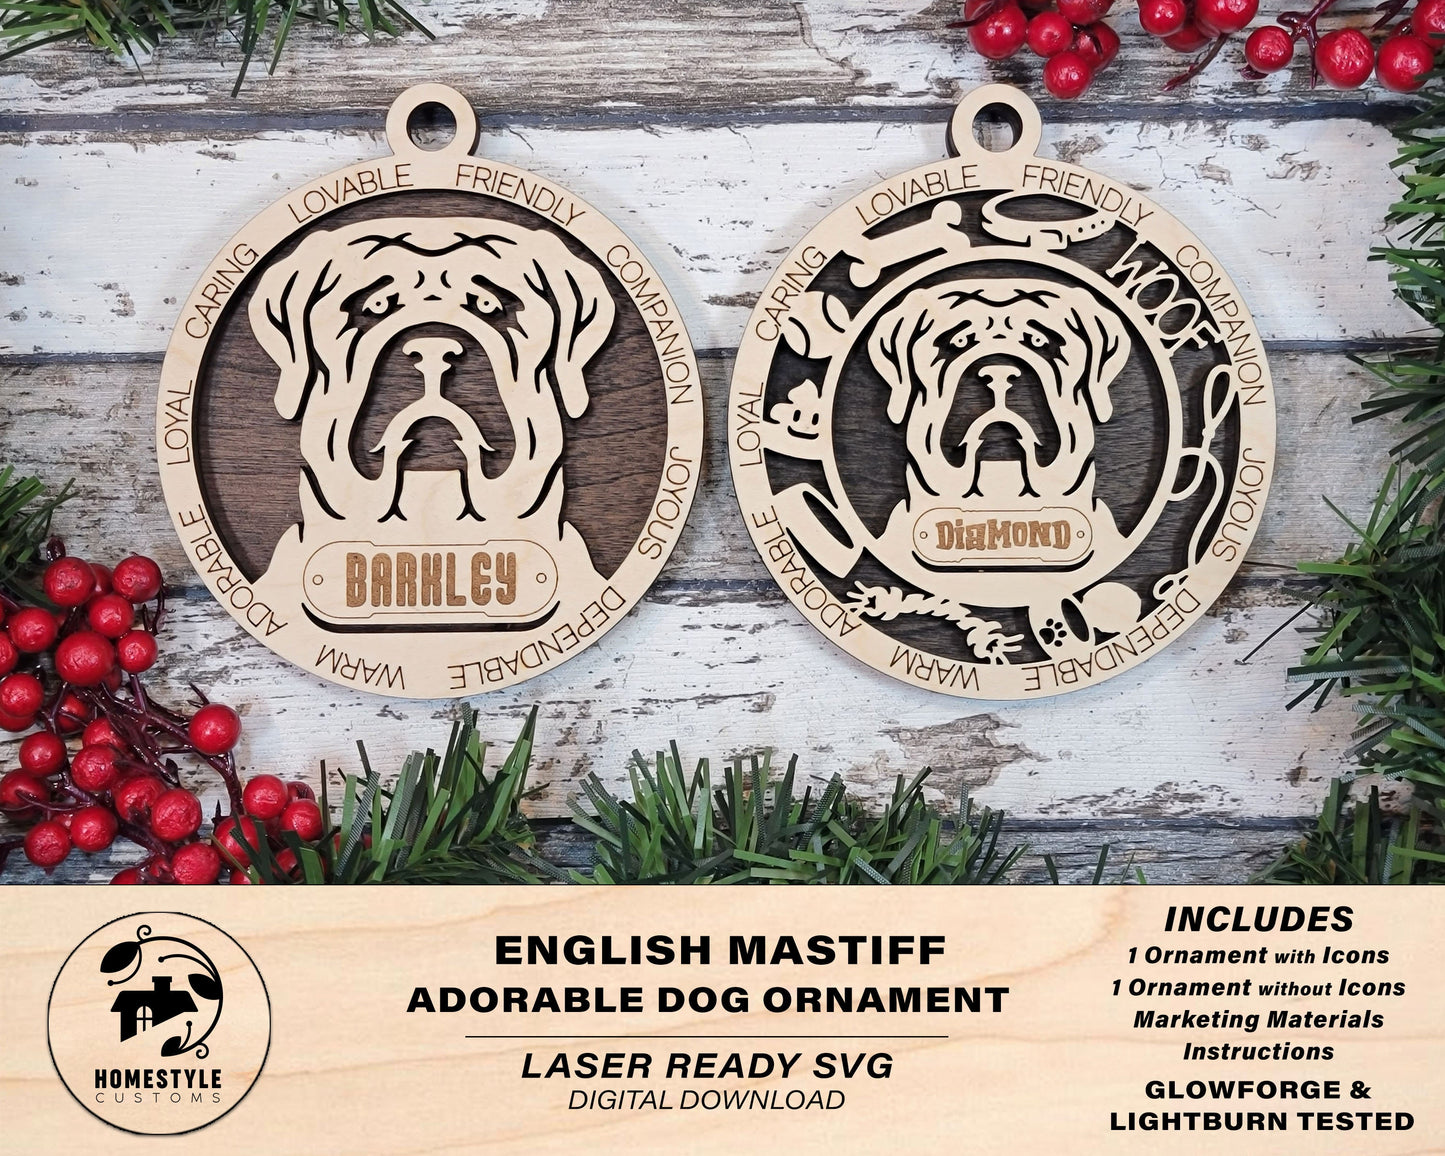 English Mastiff - Adorable Dog Ornaments - 2 Ornaments included - SVG, PDF, AI File Download - Sized for Glowforge